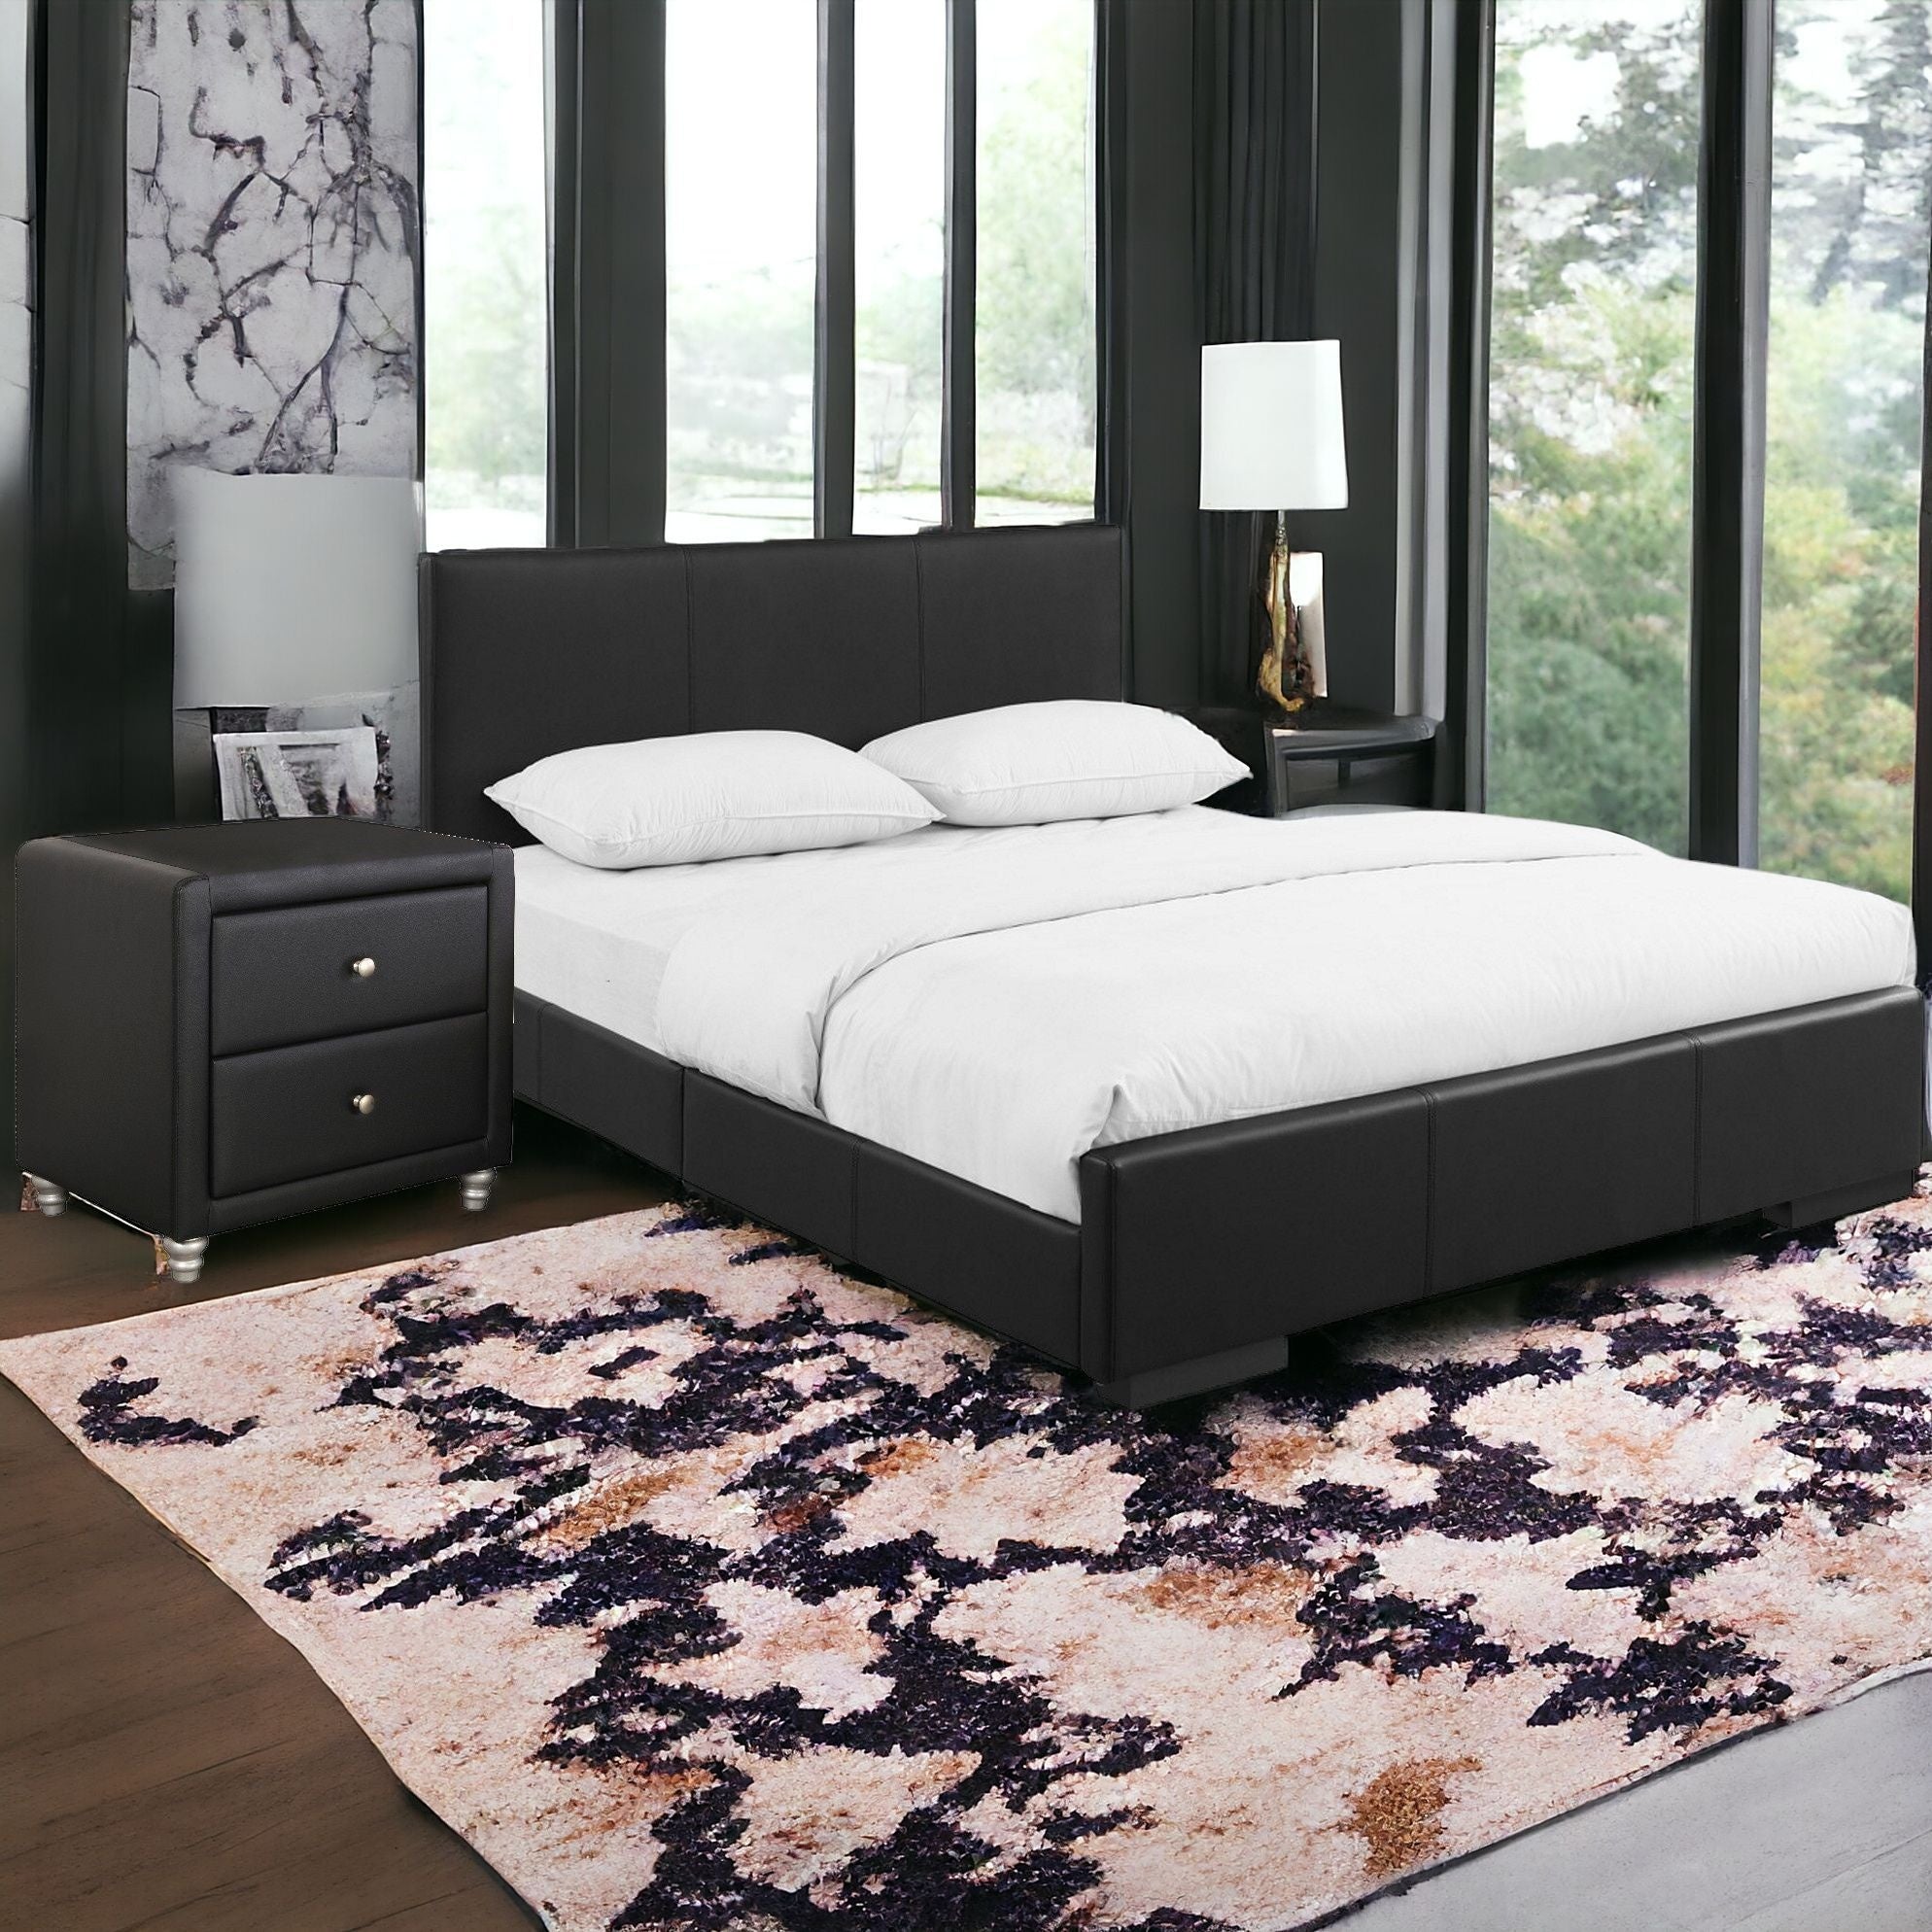 Black Upholstered King Platform Bed with Nightstand